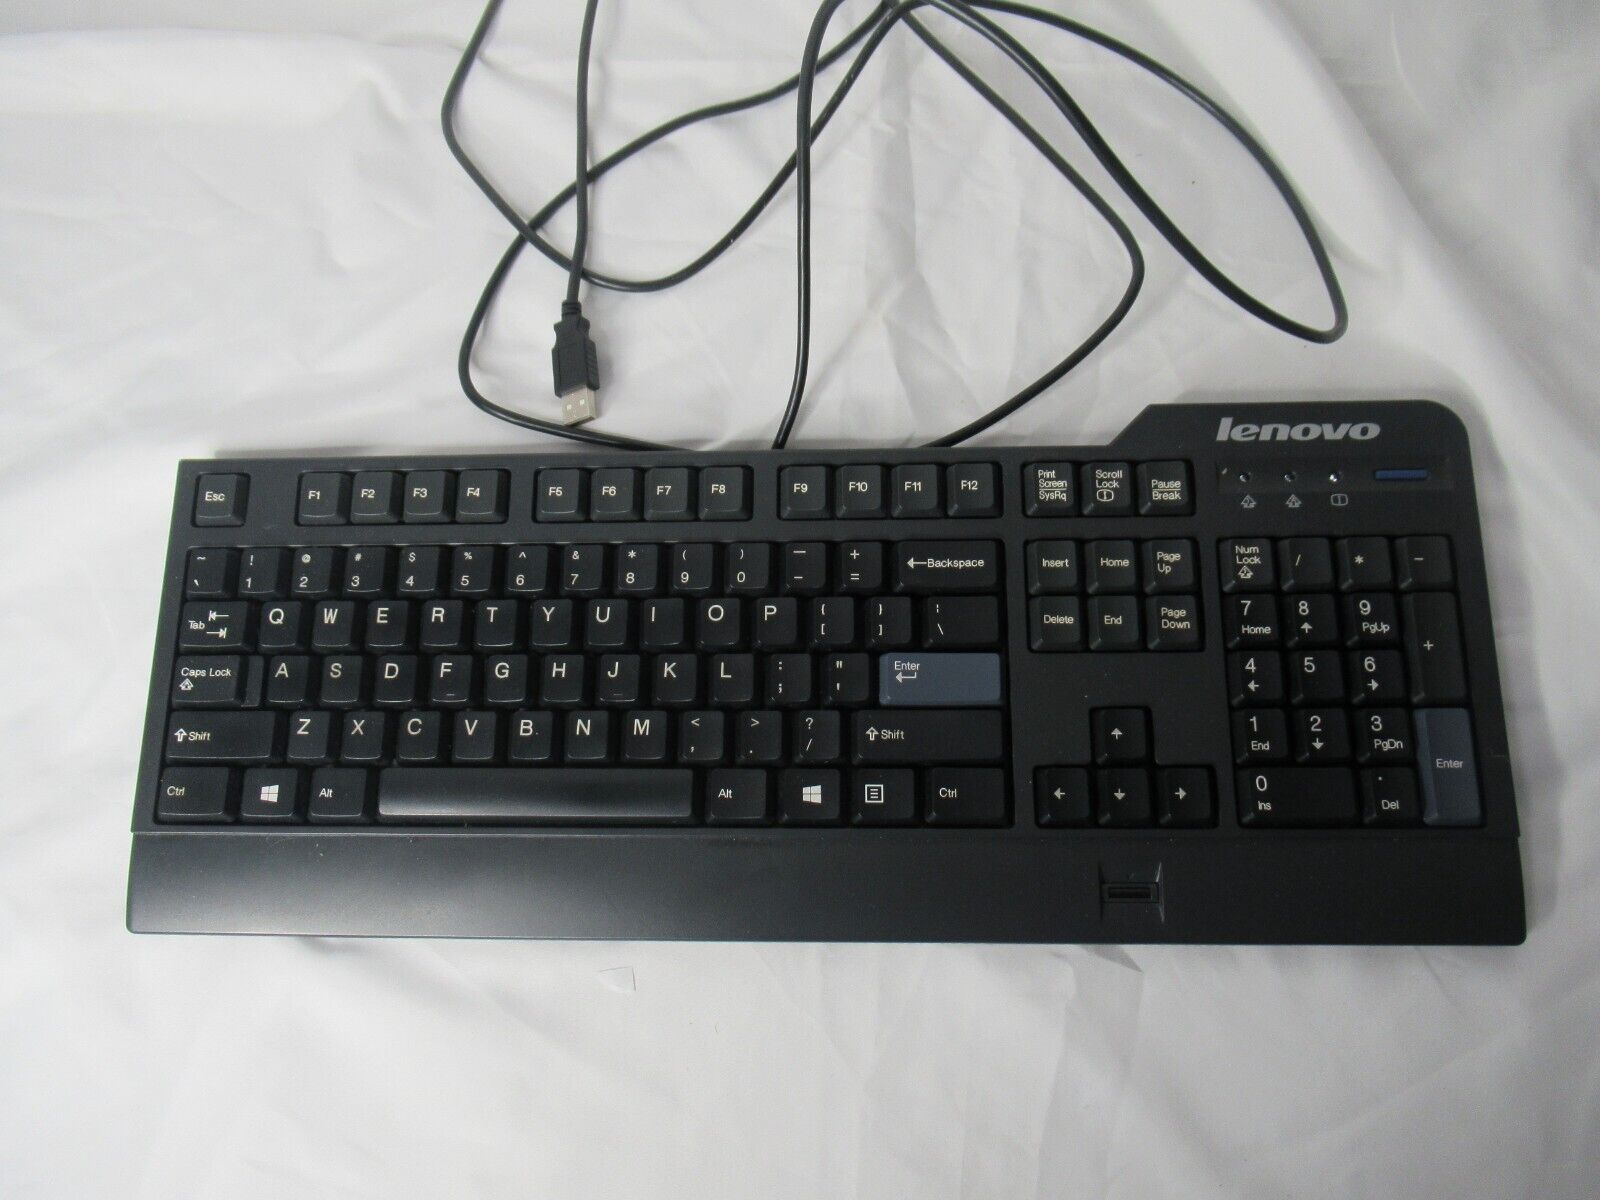 Lenovo think pad keyboard KUF1256 with Fingerprint reader